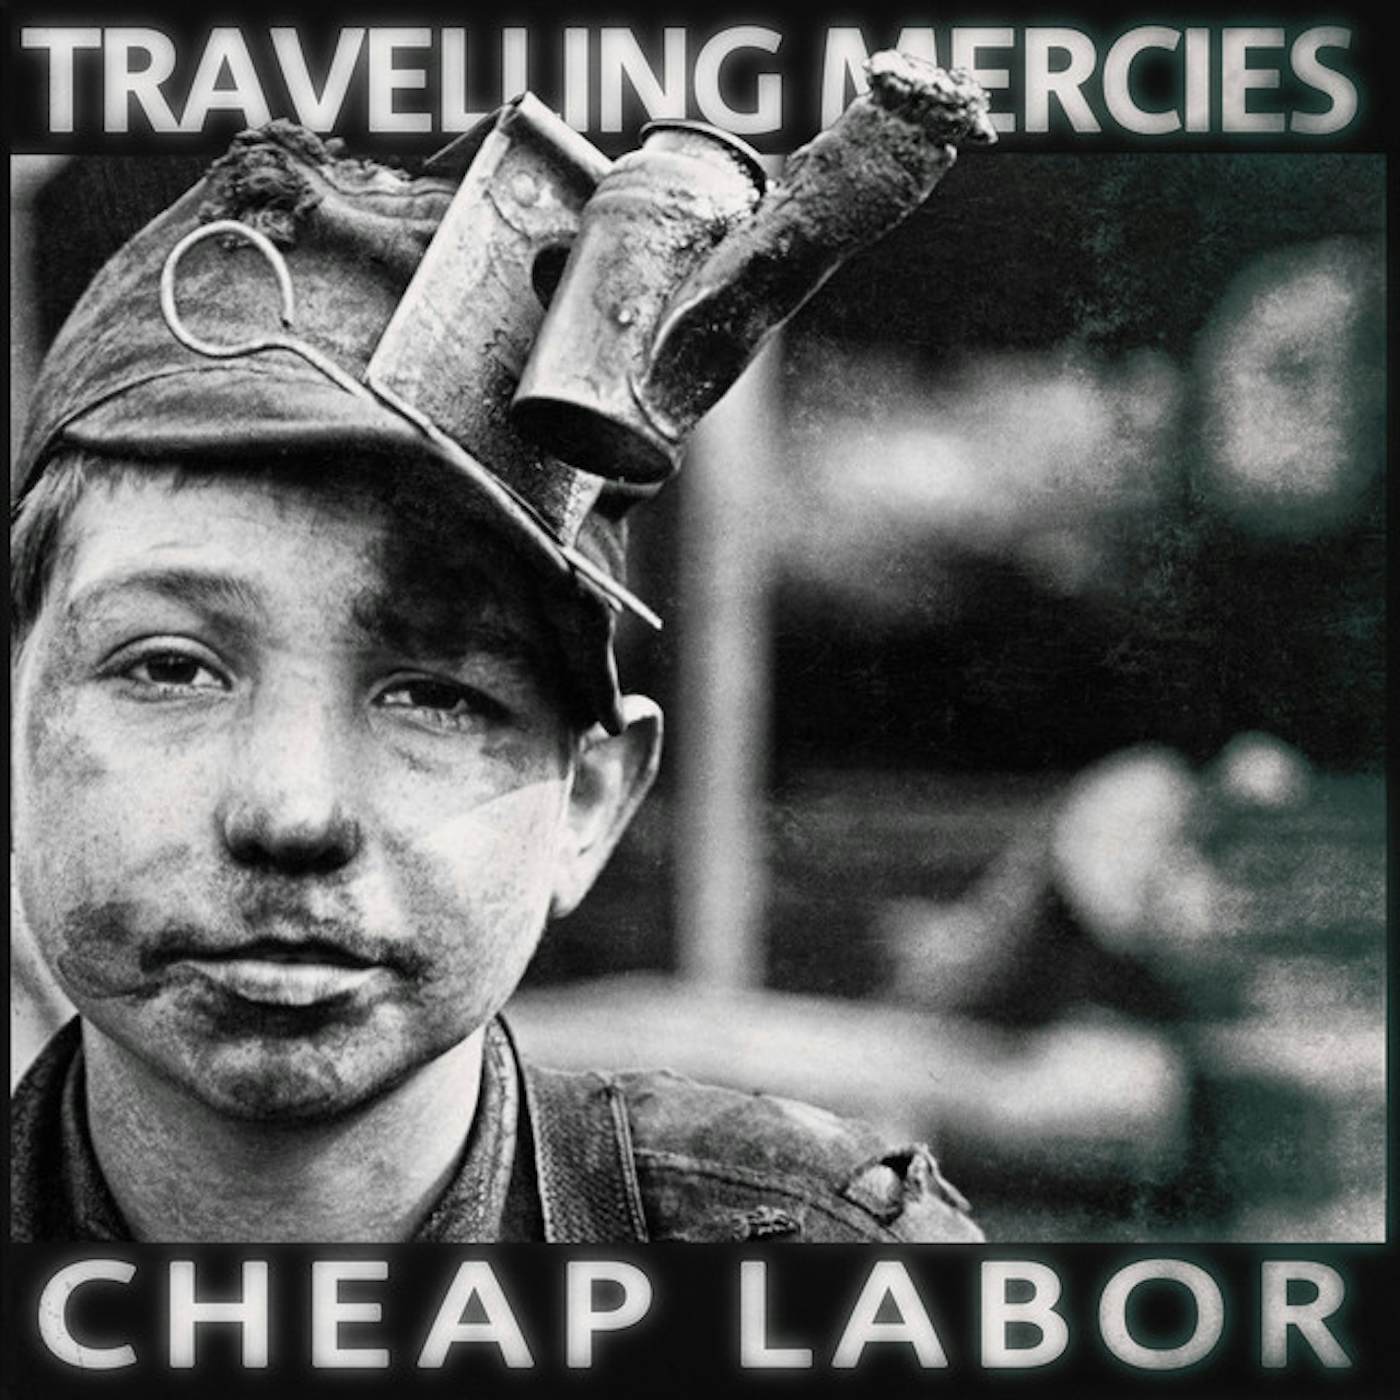 Travelling Mercies Cheap Labor Vinyl Record